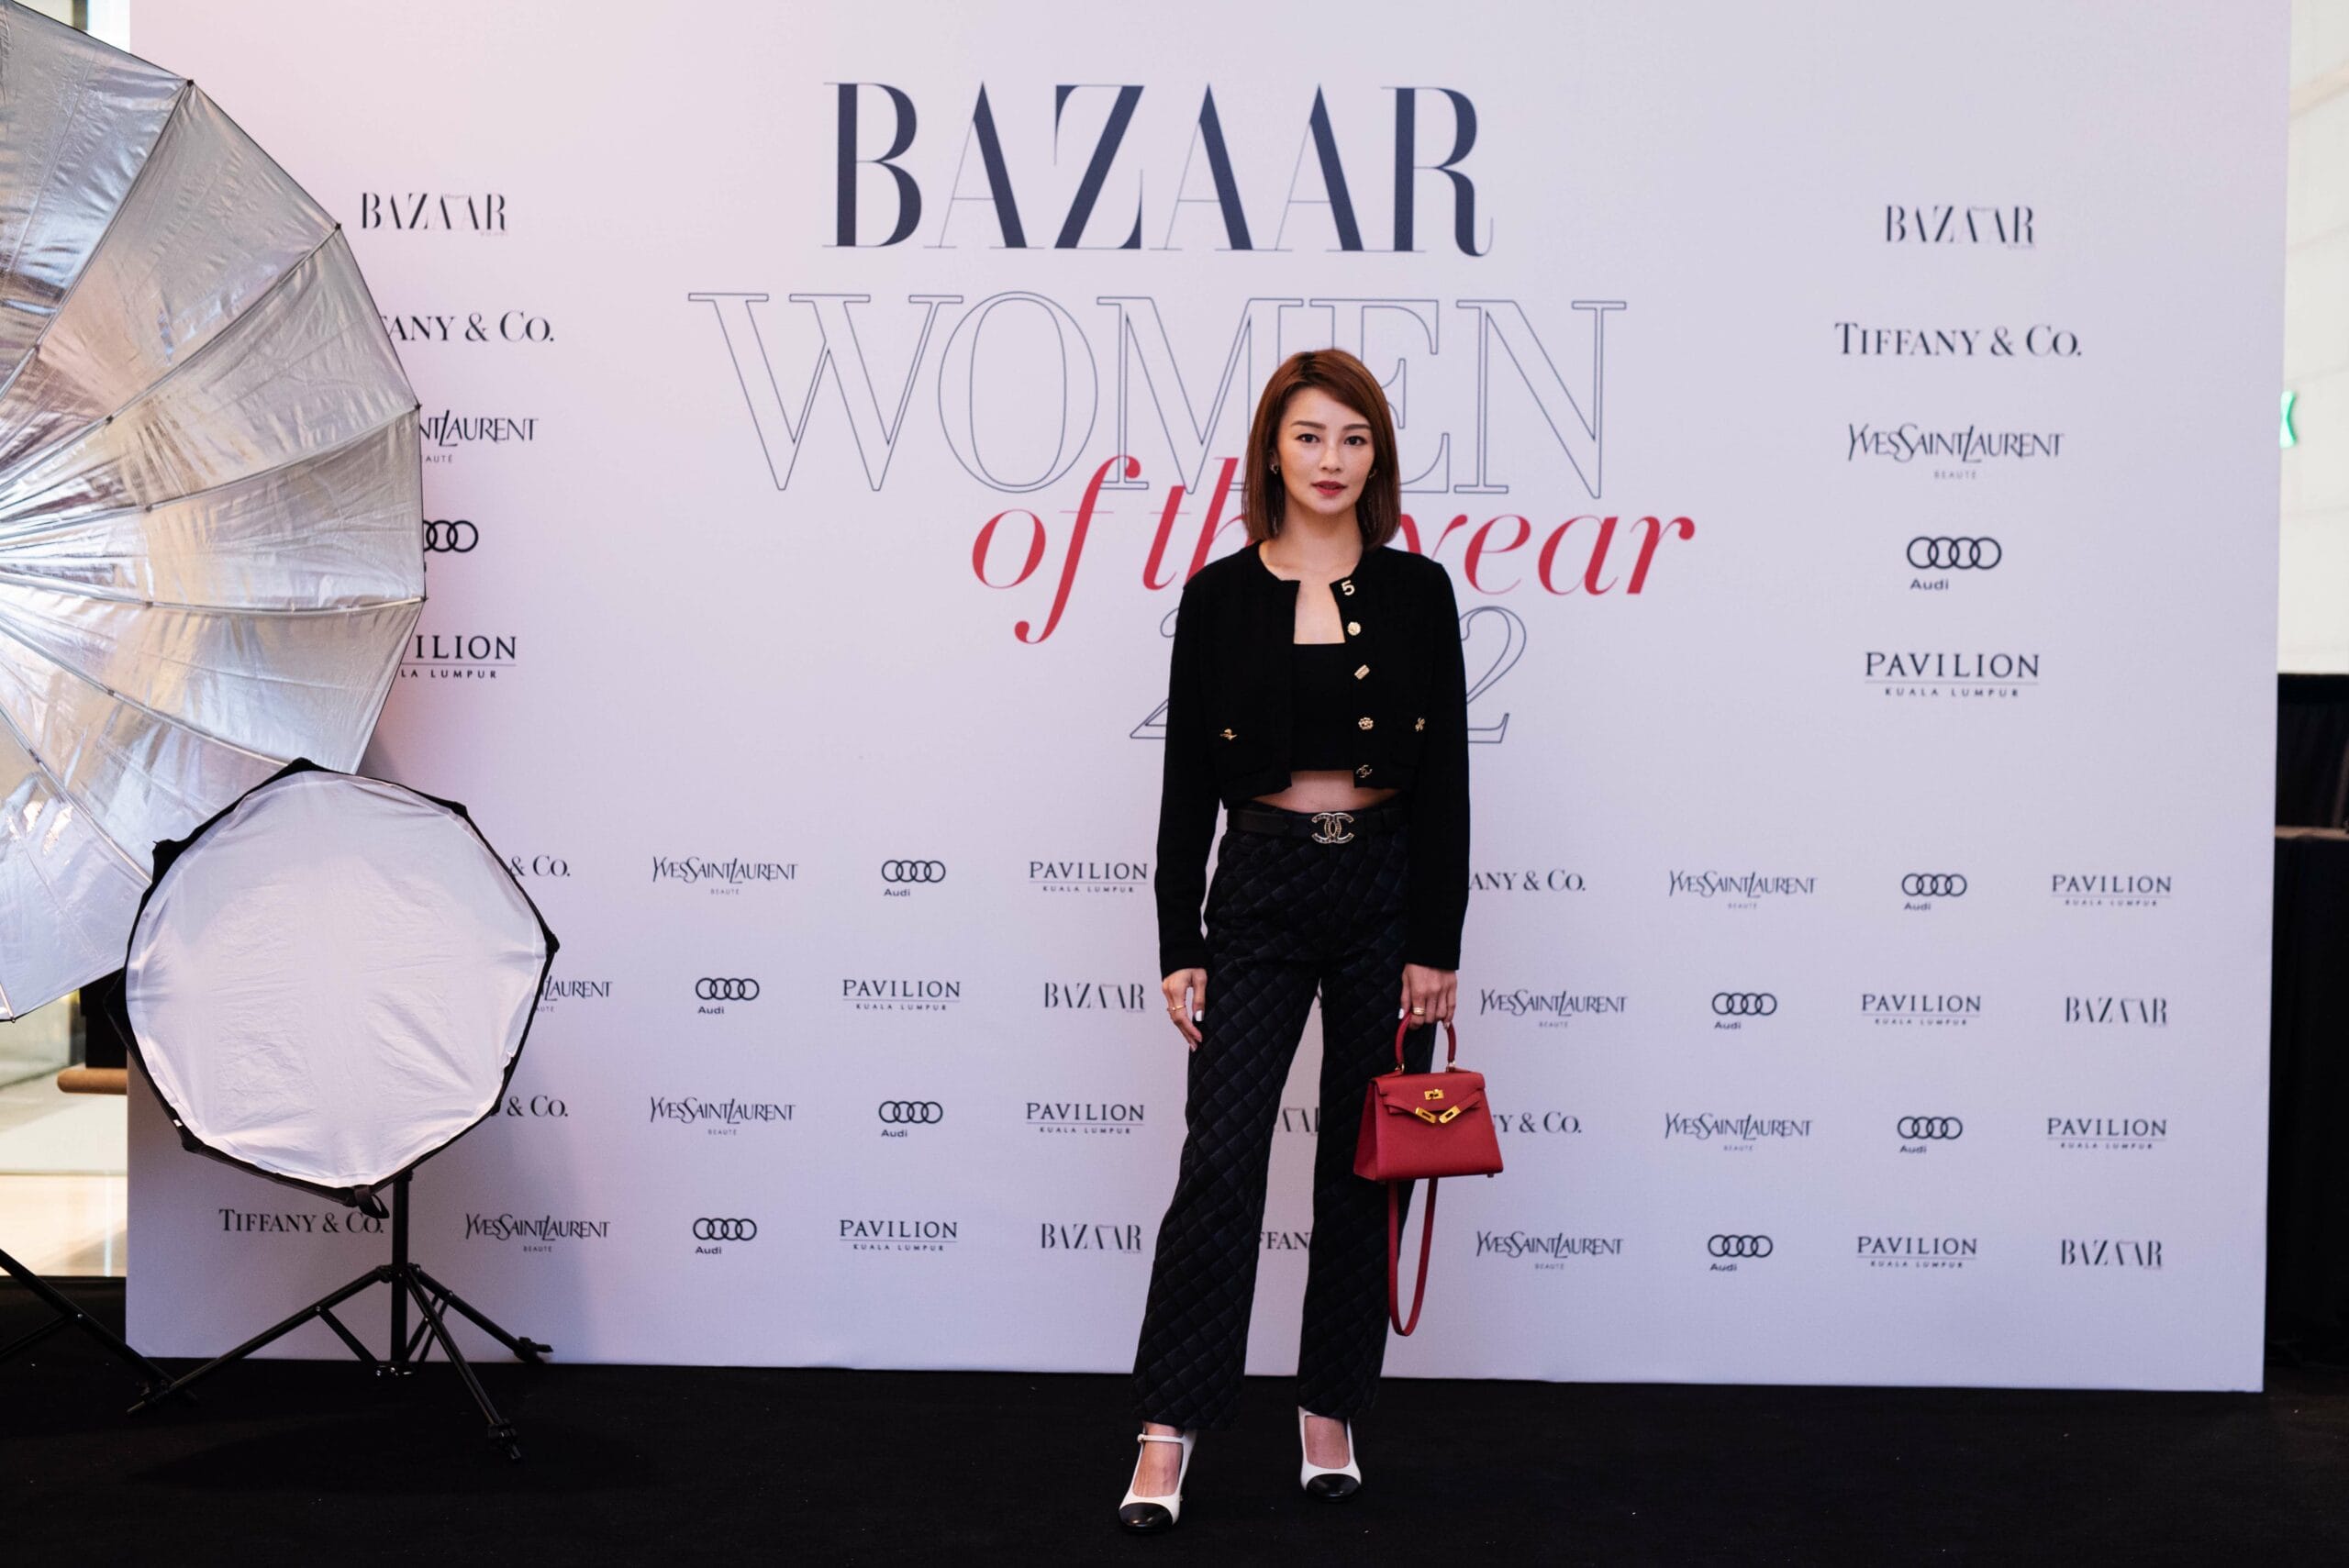 Louis Vuitton Coussin  Harper's BAZAAR Malaysia